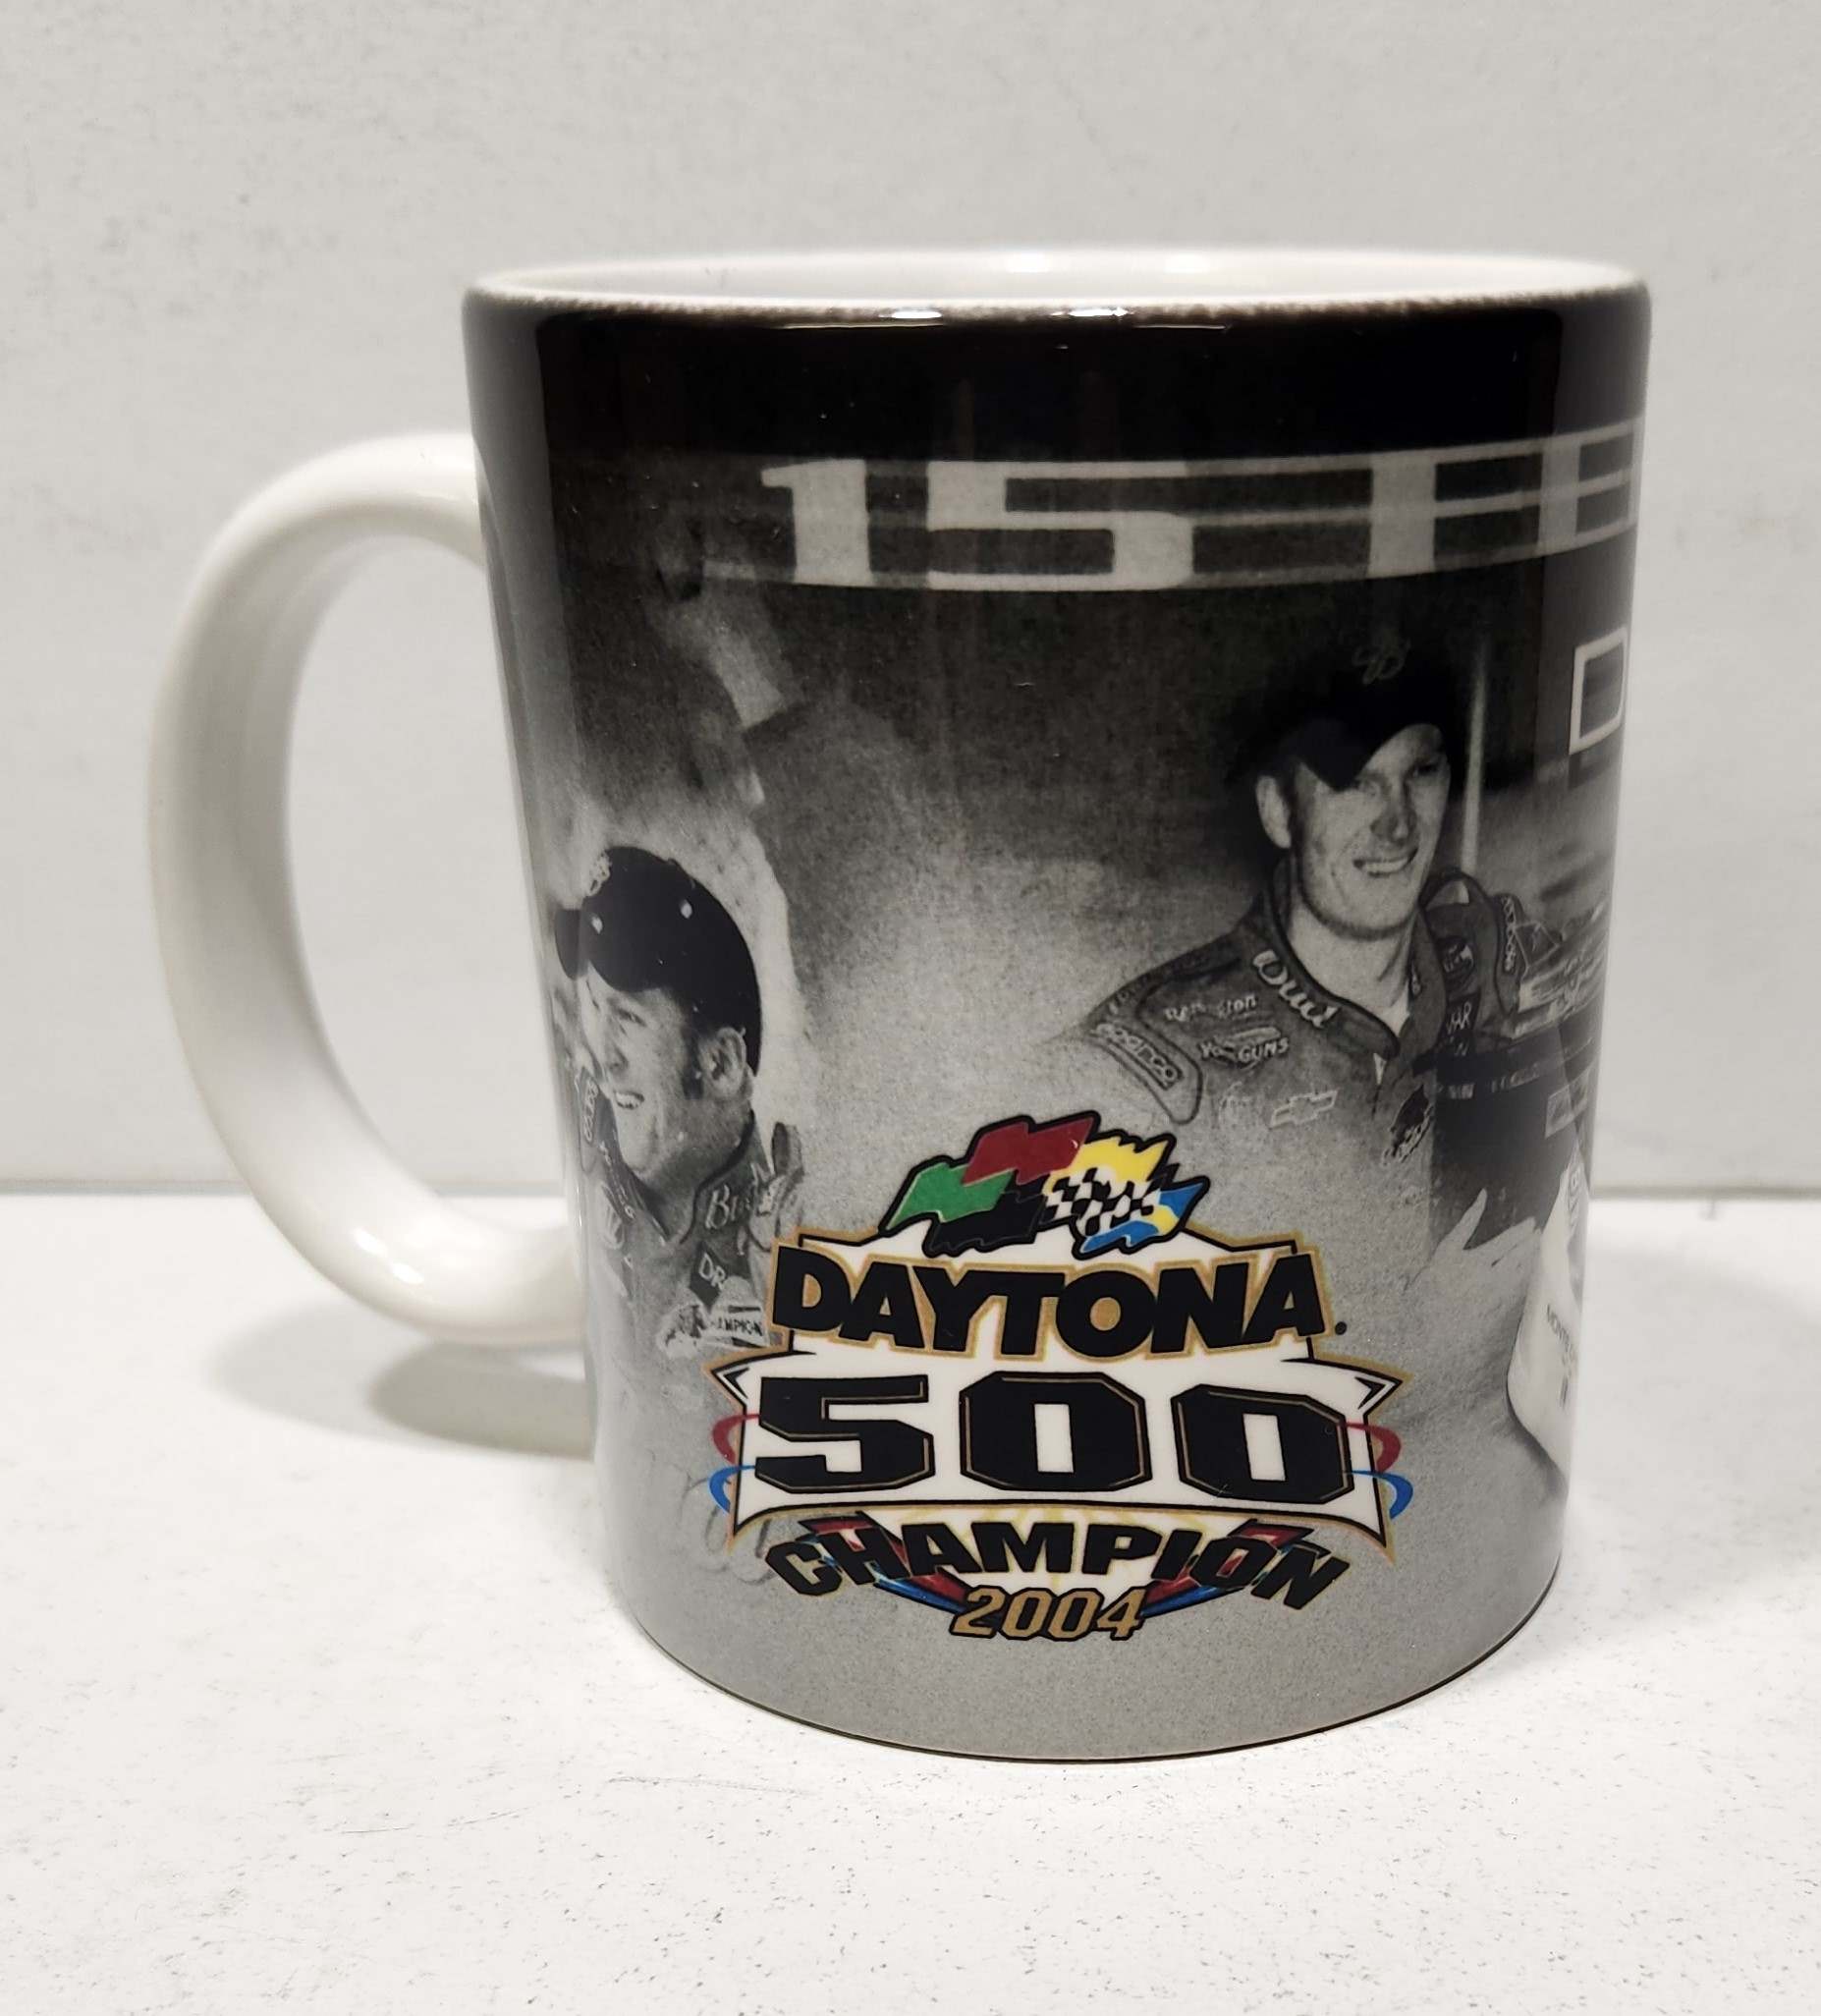 2004 Dale Earnhardt Jr Buidweiser "Daytona 500 Winner" collectors mug